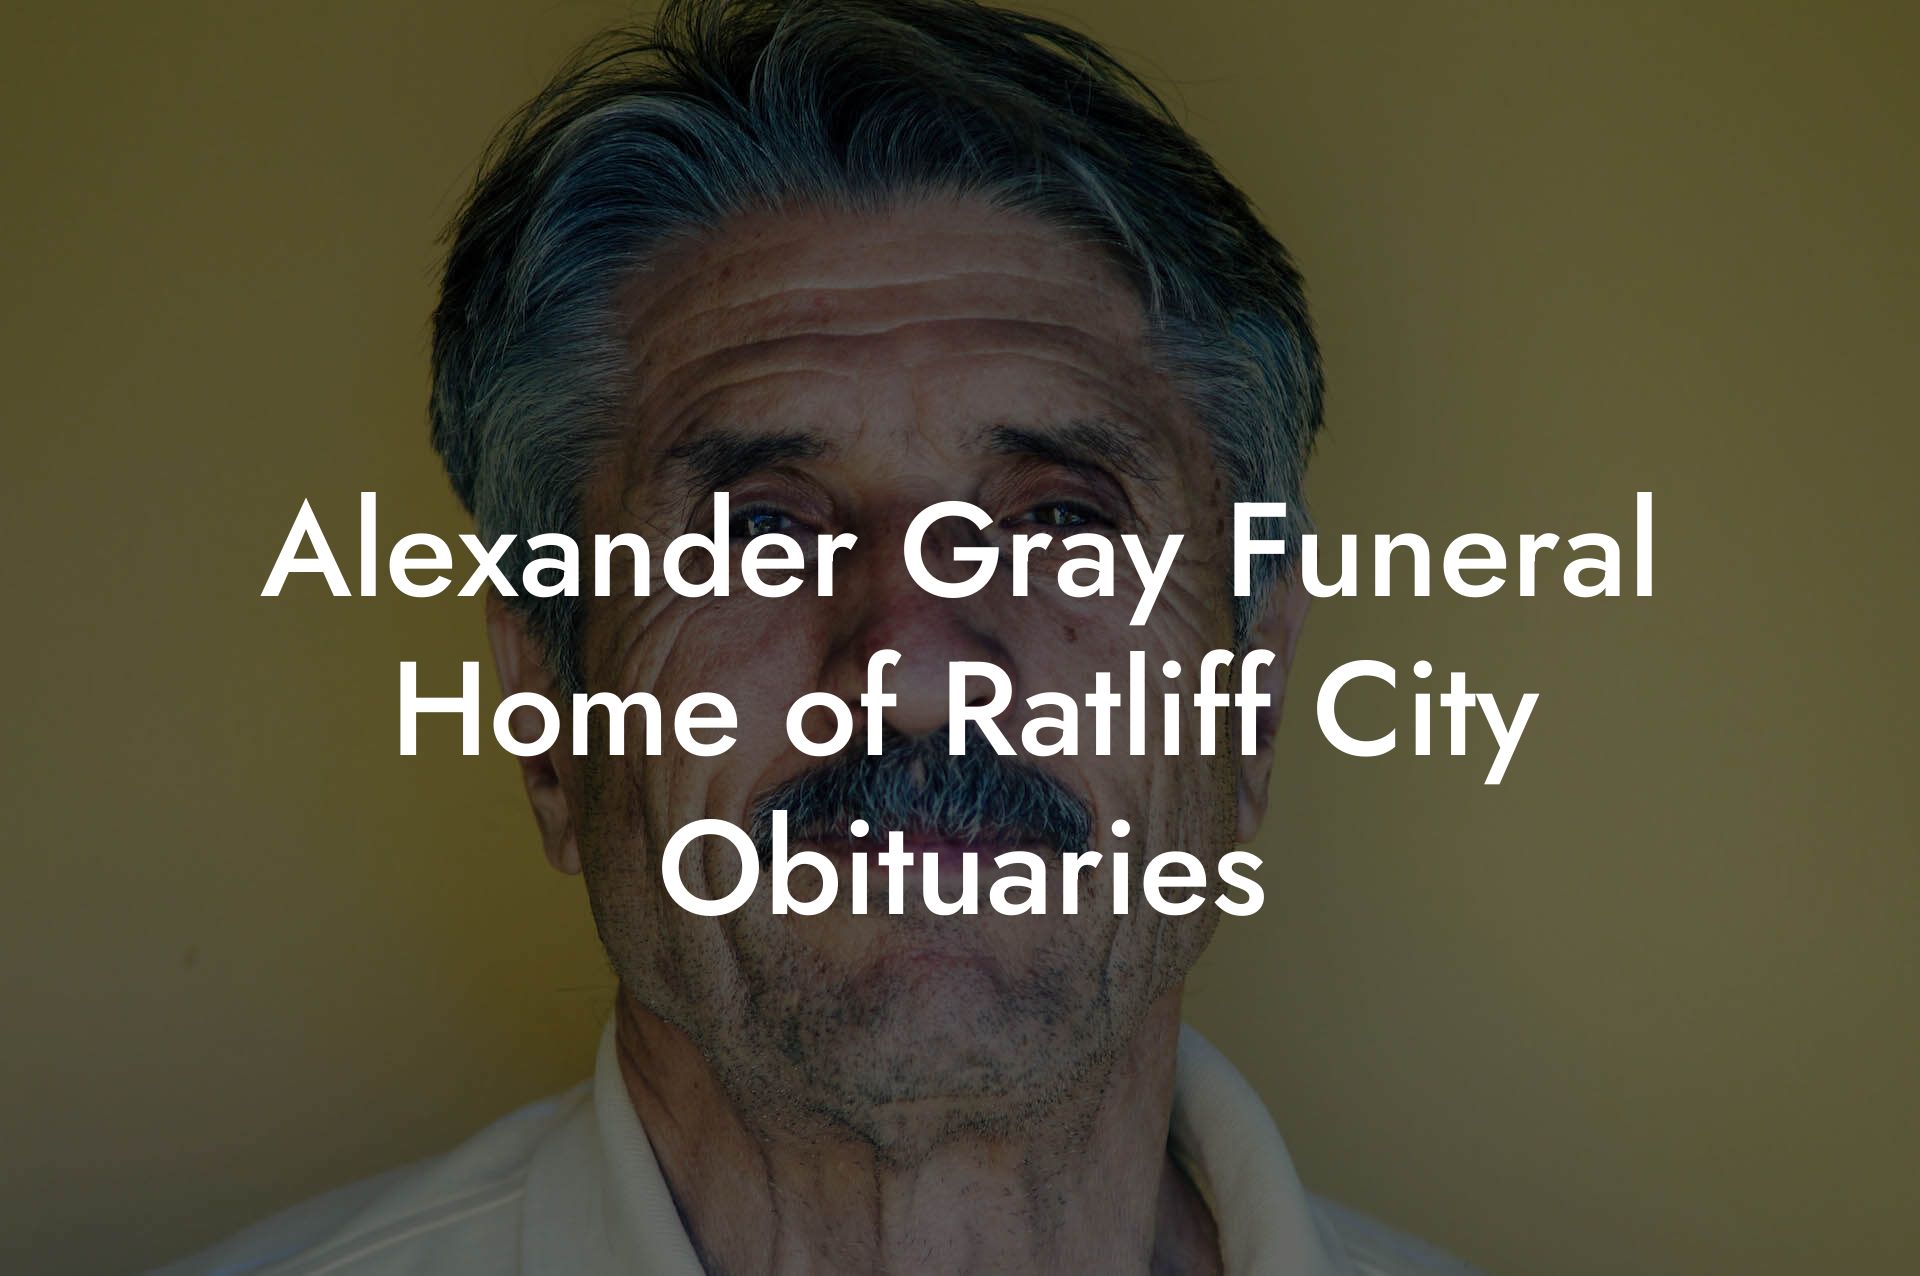 Alexander Gray Funeral Home of Ratliff City Obituaries